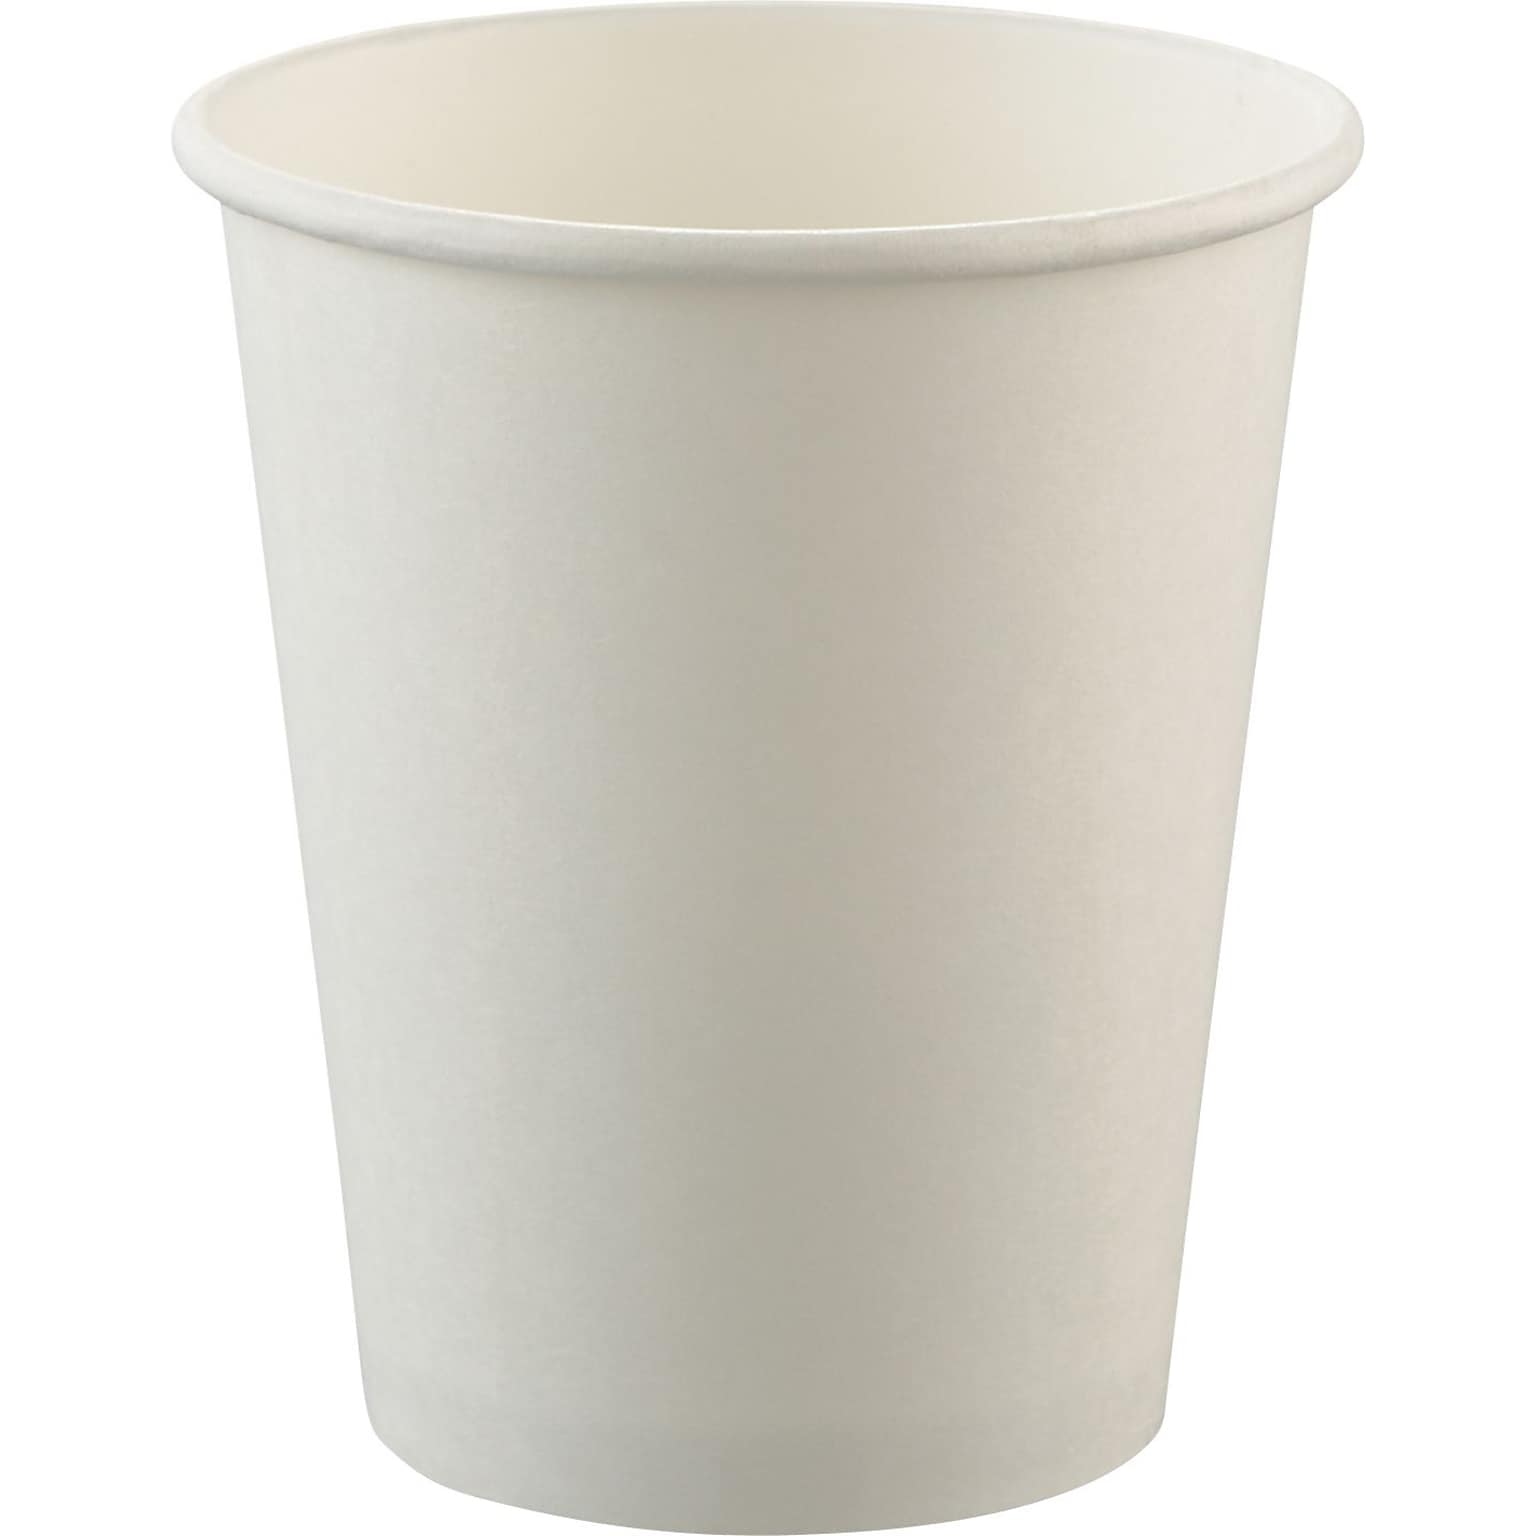 Solo Paper Hot Cups 8 oz., White, 1000/Carton (SLOU508NU)